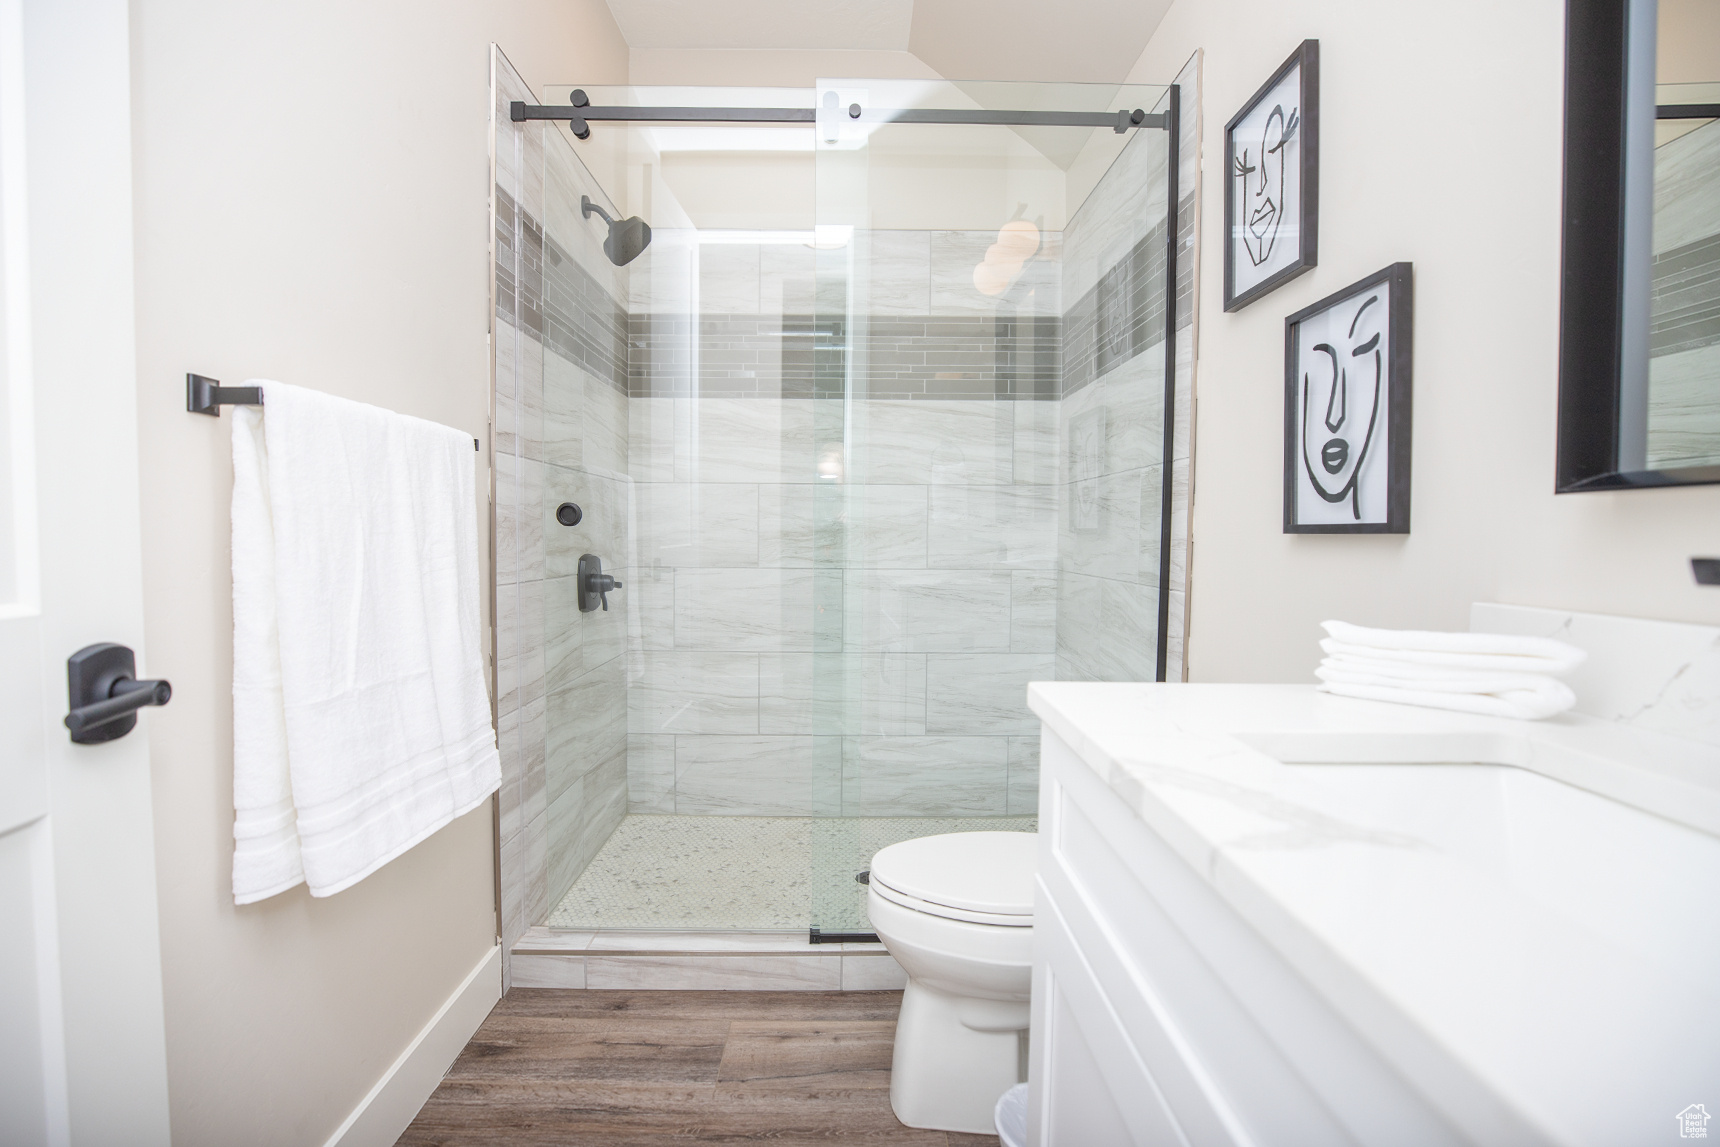 Bathroom with hardwood / wood-style floors, toilet, vanity, and walk in shower